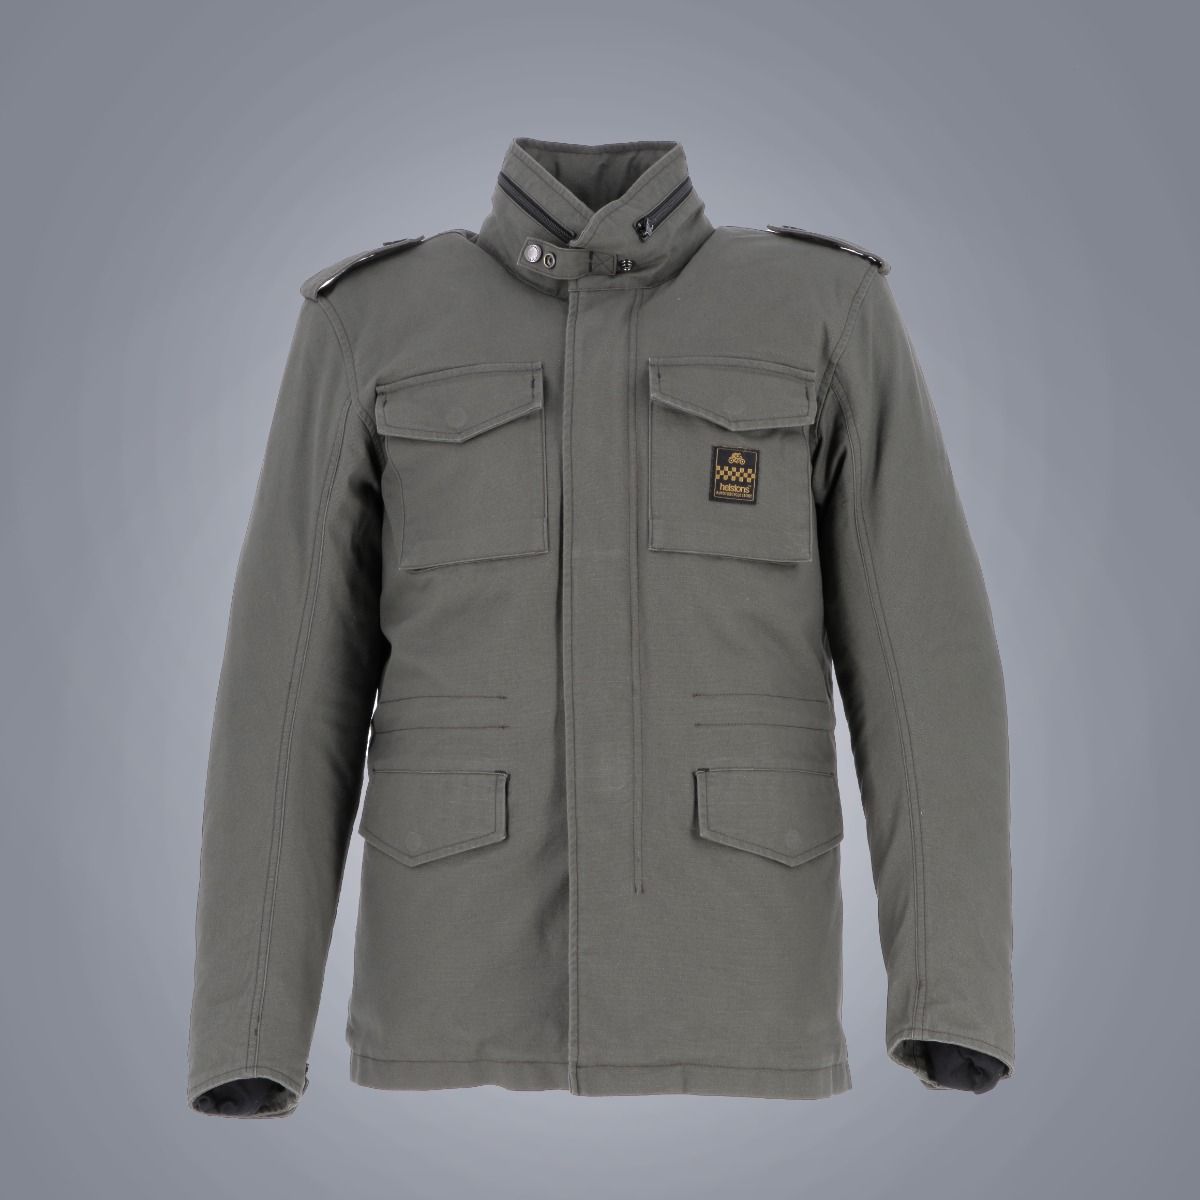 Image of Helstons Division Jacket Khaki Size M ID 3662136100763